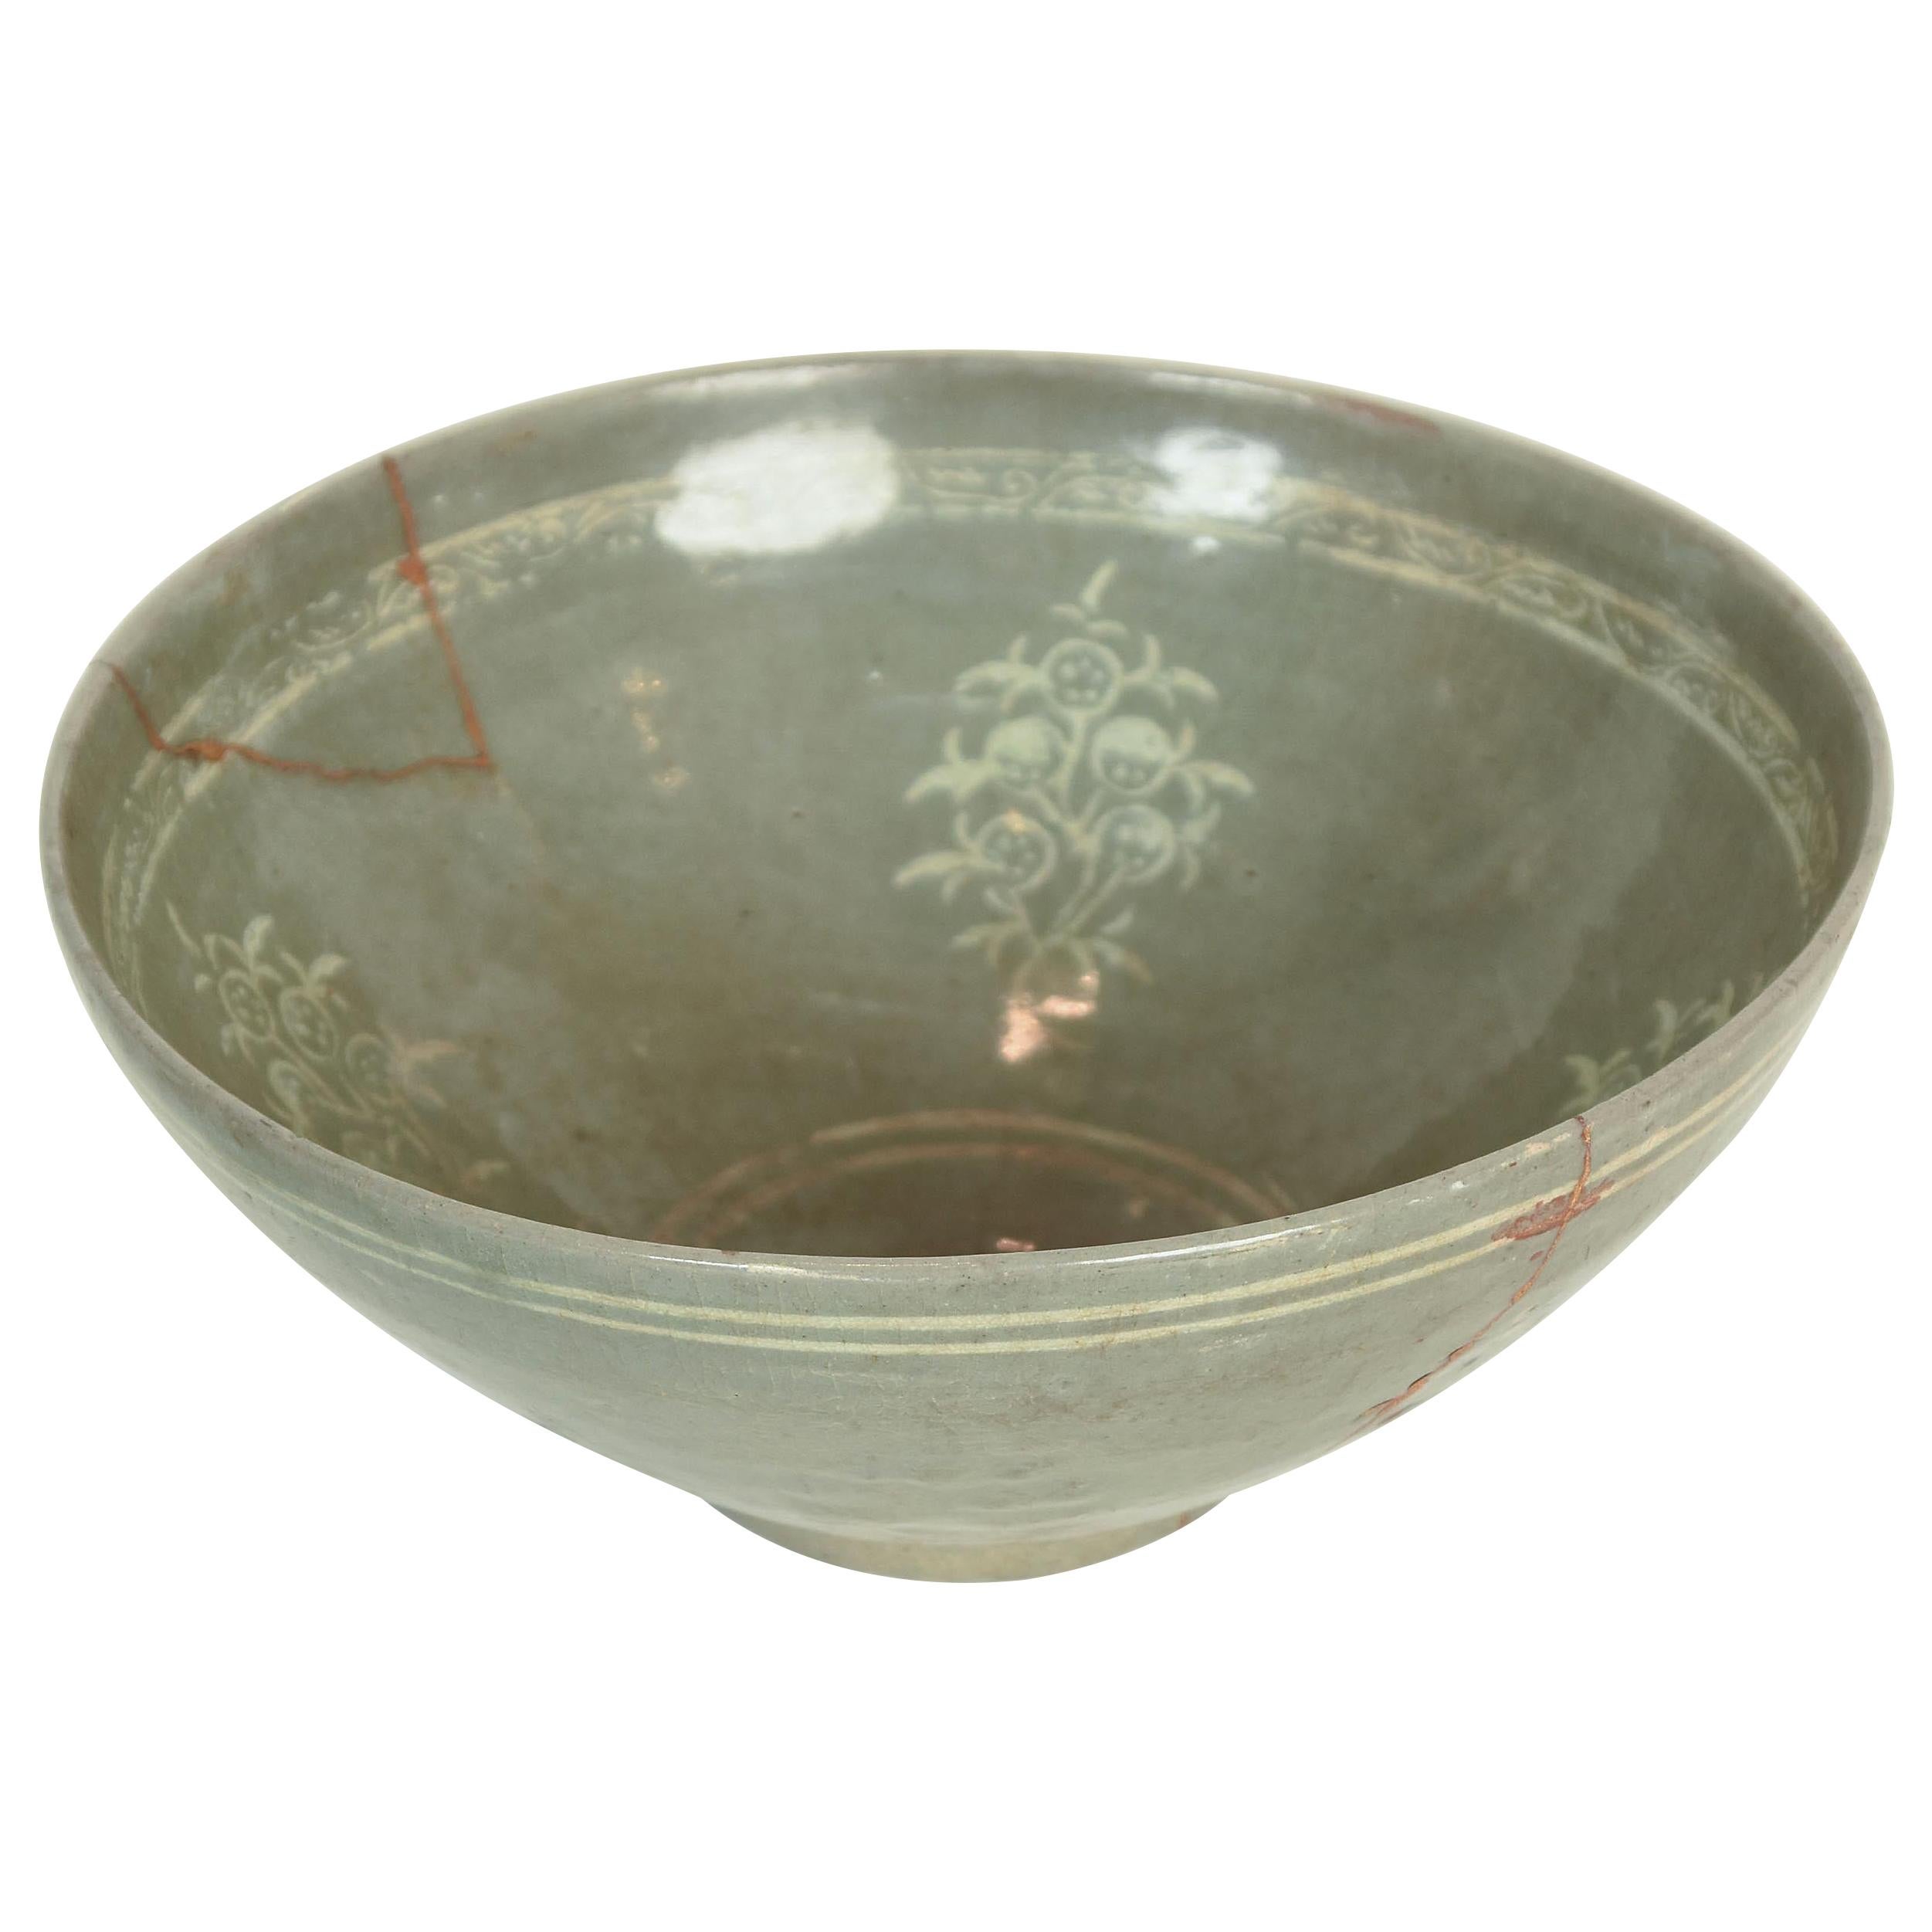 15th Century Korean Celadon Tea Bowl with Kintsugi Repair